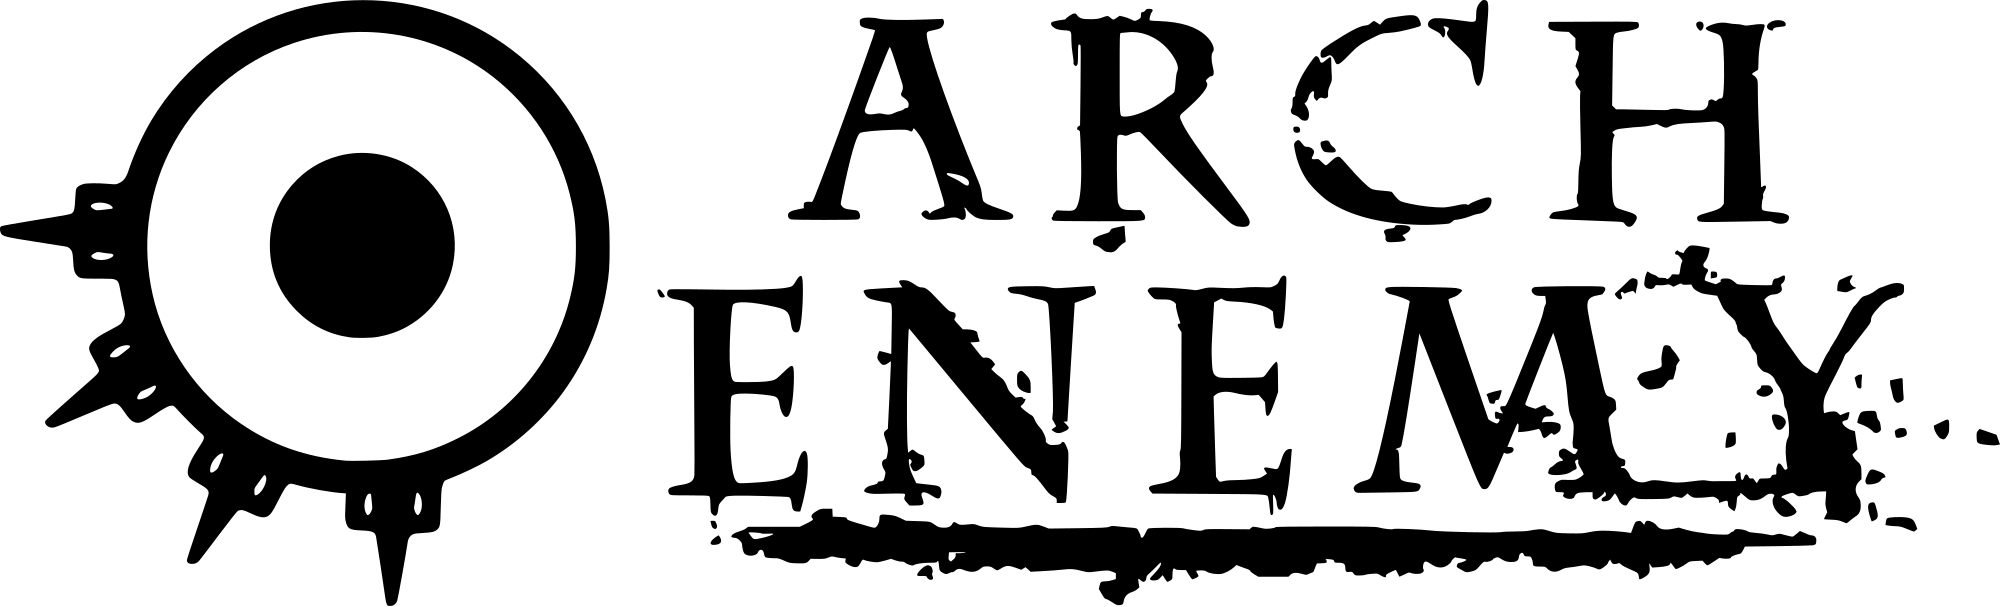 Arch Enemy Logo PNG - 36819